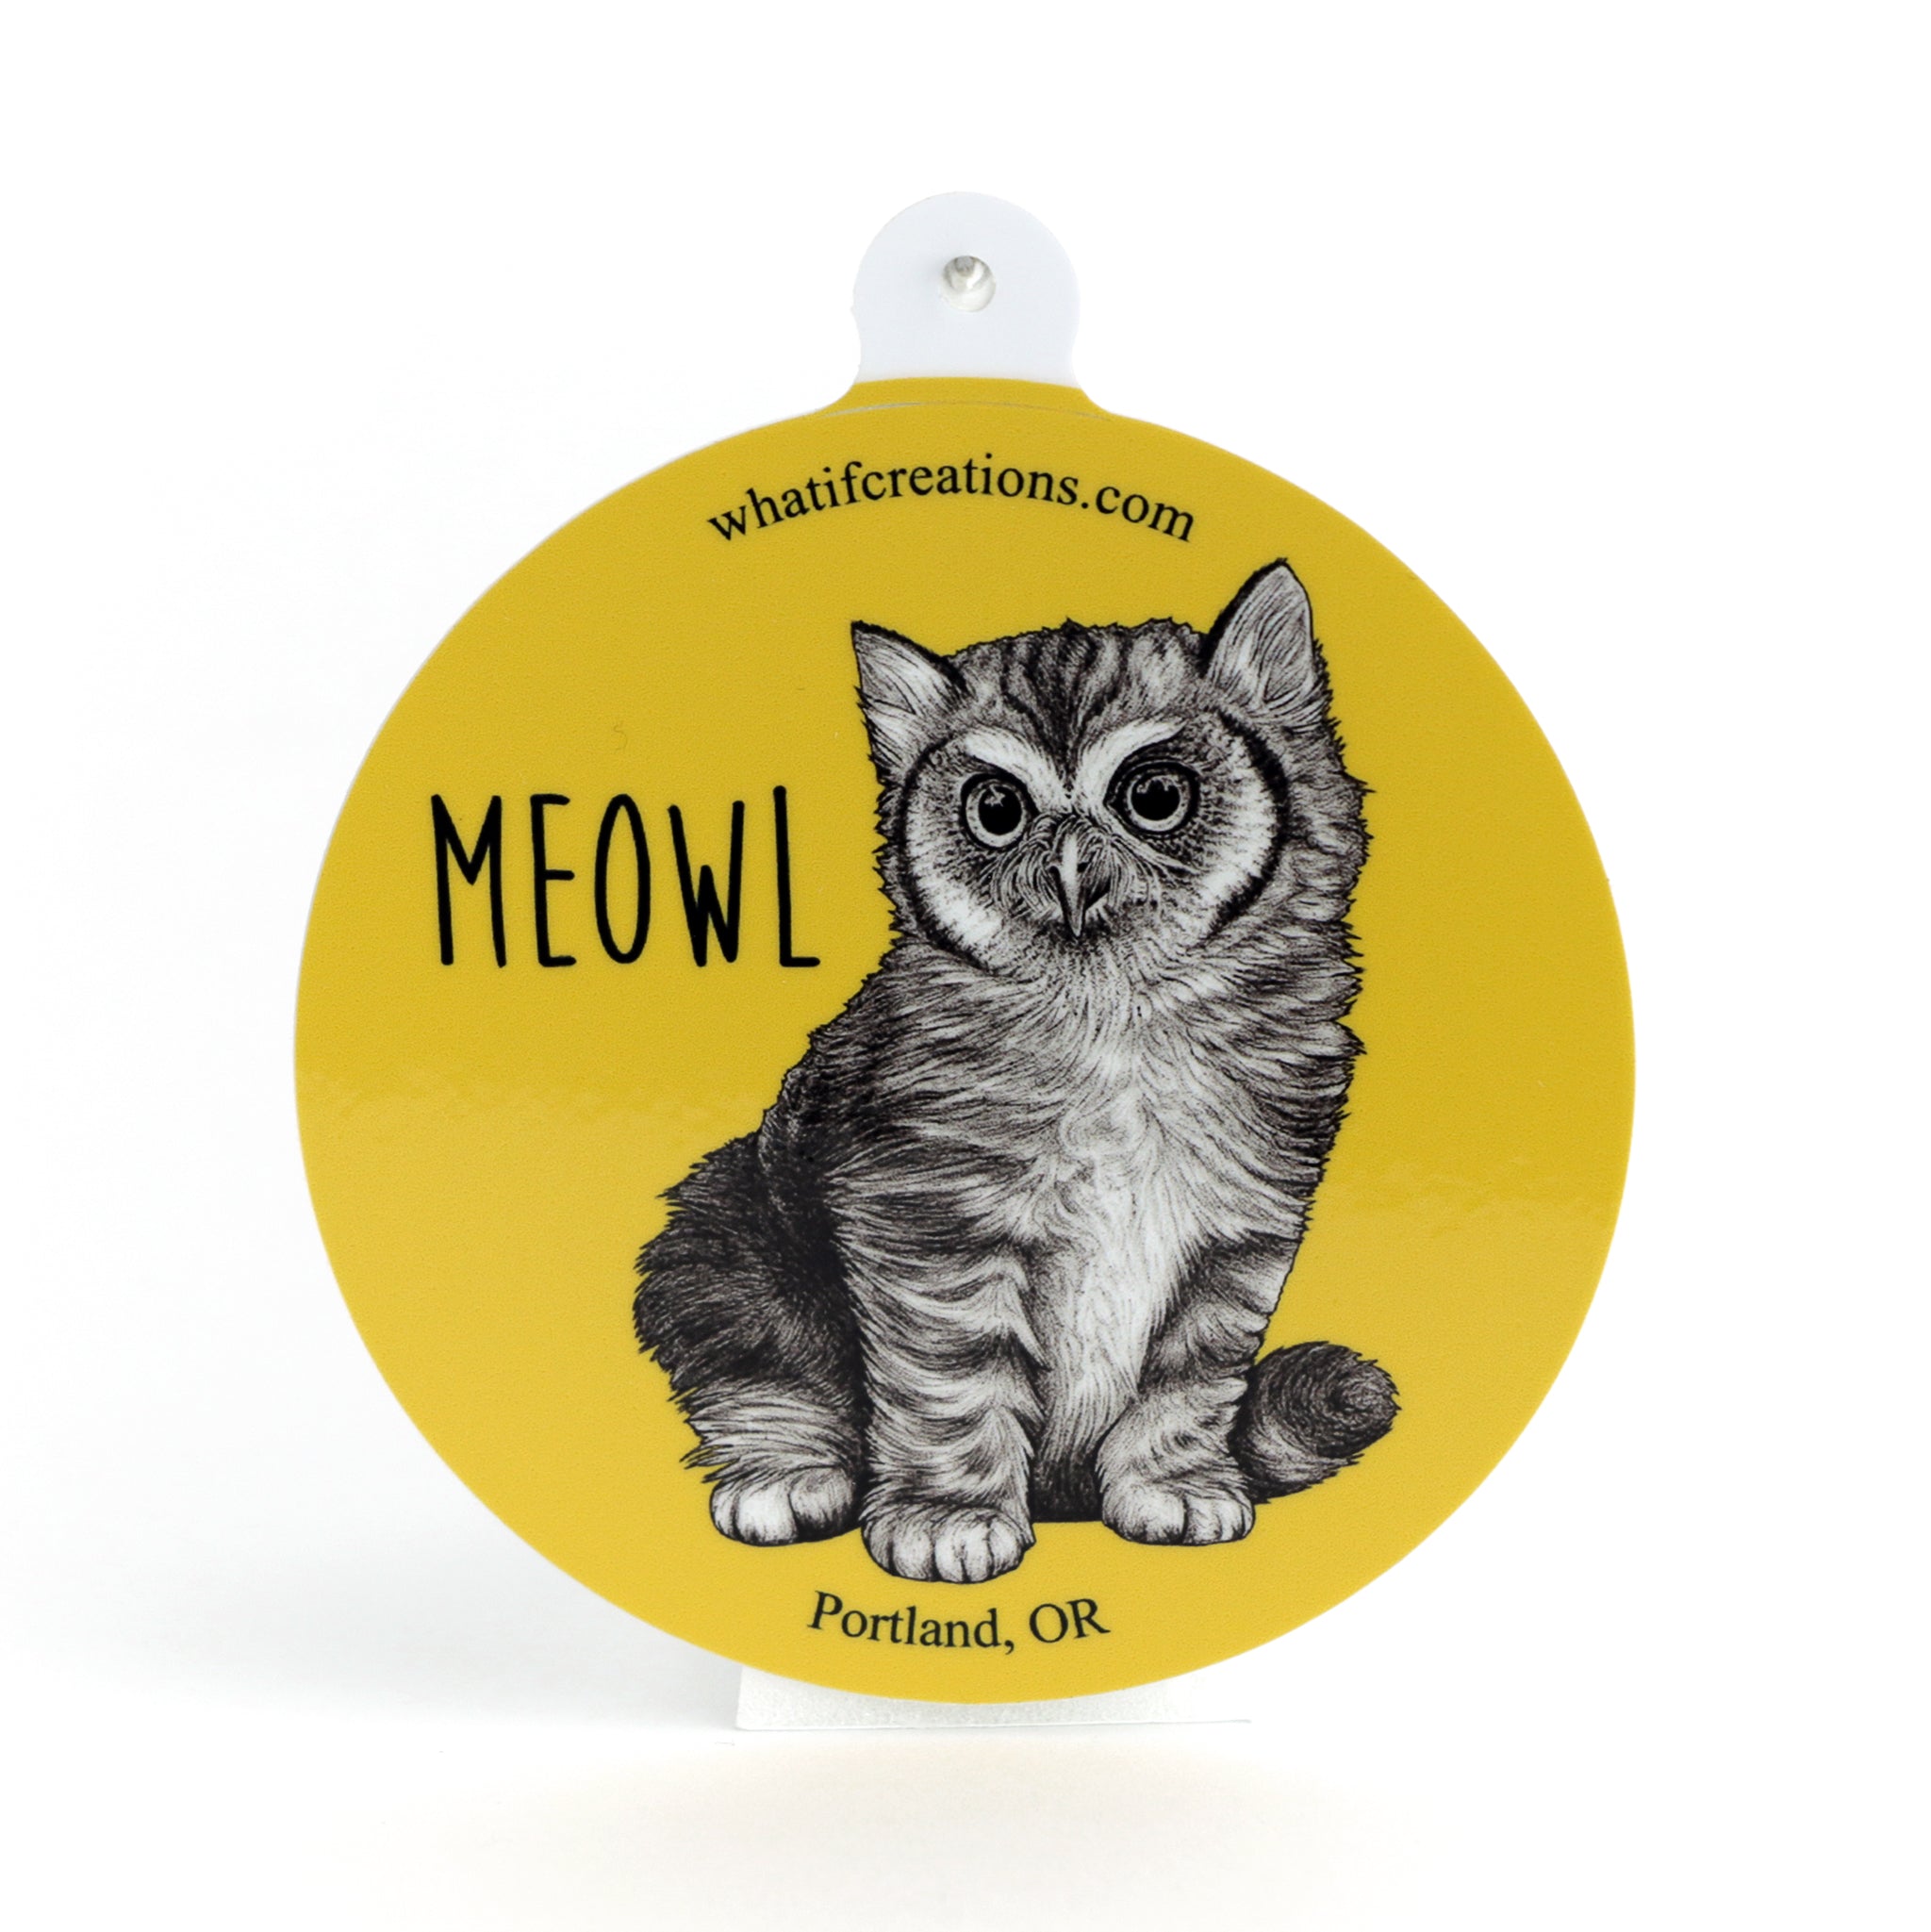 Meowl | Cat + Owl Hybrid Animal | 3" Vinyl Sticker